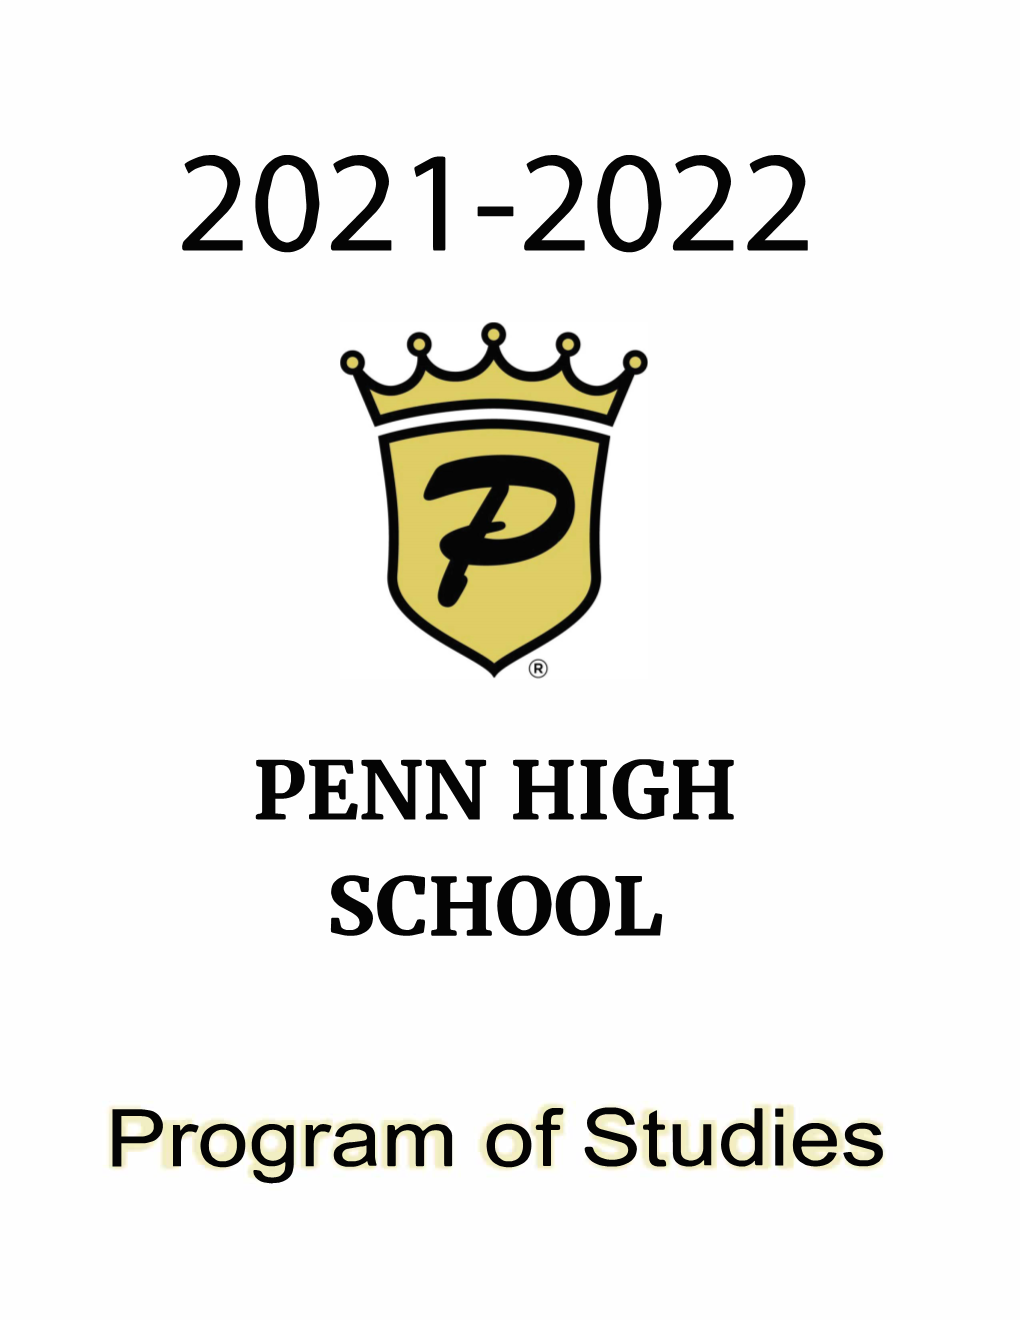 2021-2022 Program of Studies